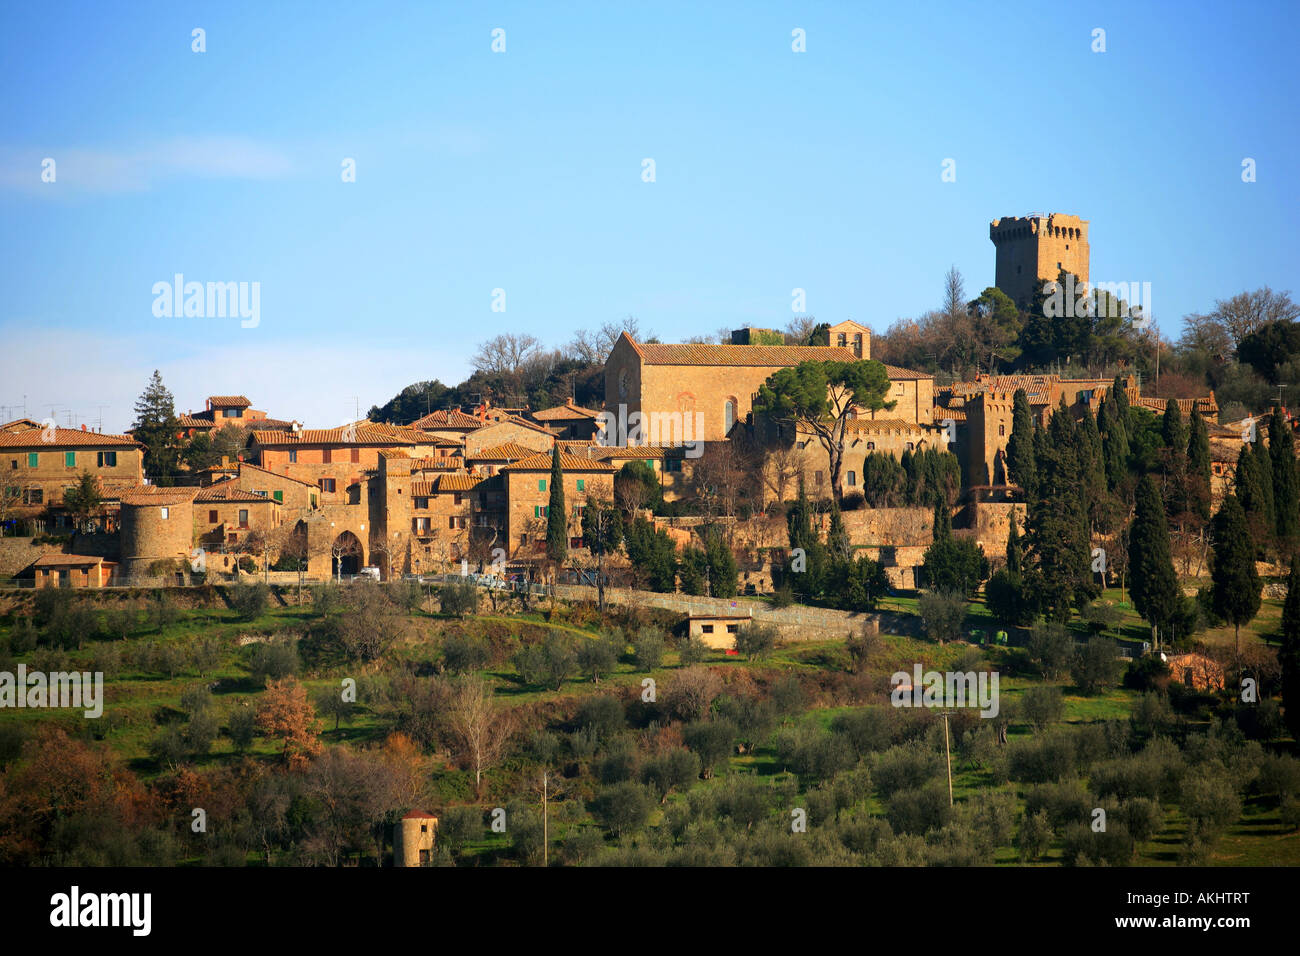 Cityscape, Monticchiello, Tuscany, Italy Stock Photo - Alamy